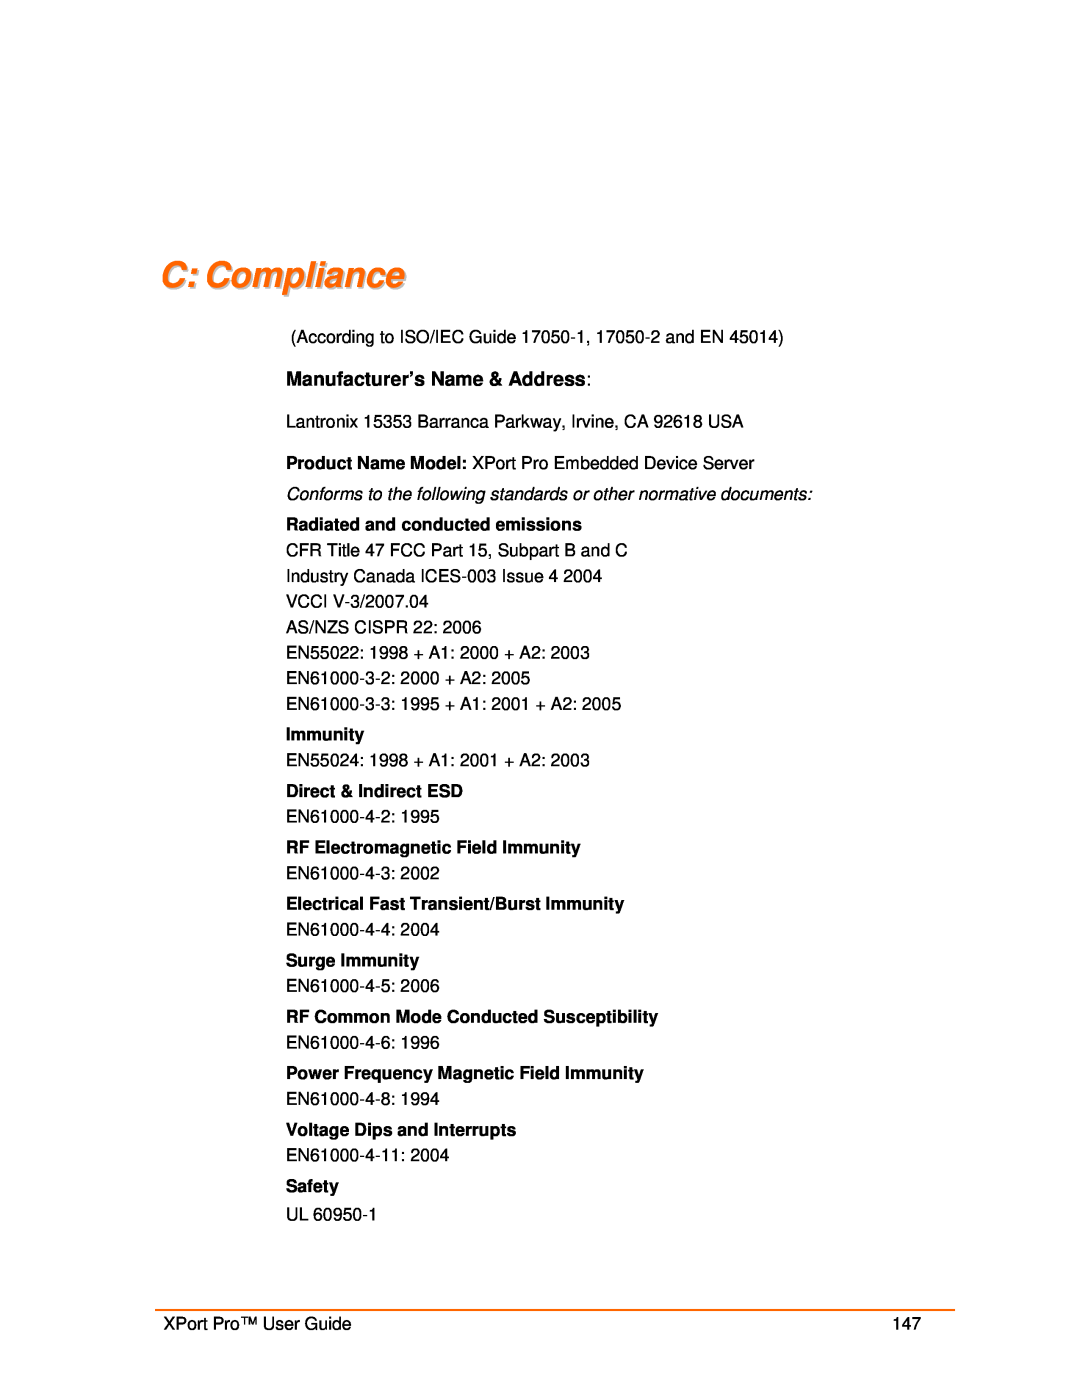 Lantronix 900-560 manual C Compliance, Manufacturer’s Name & Address 